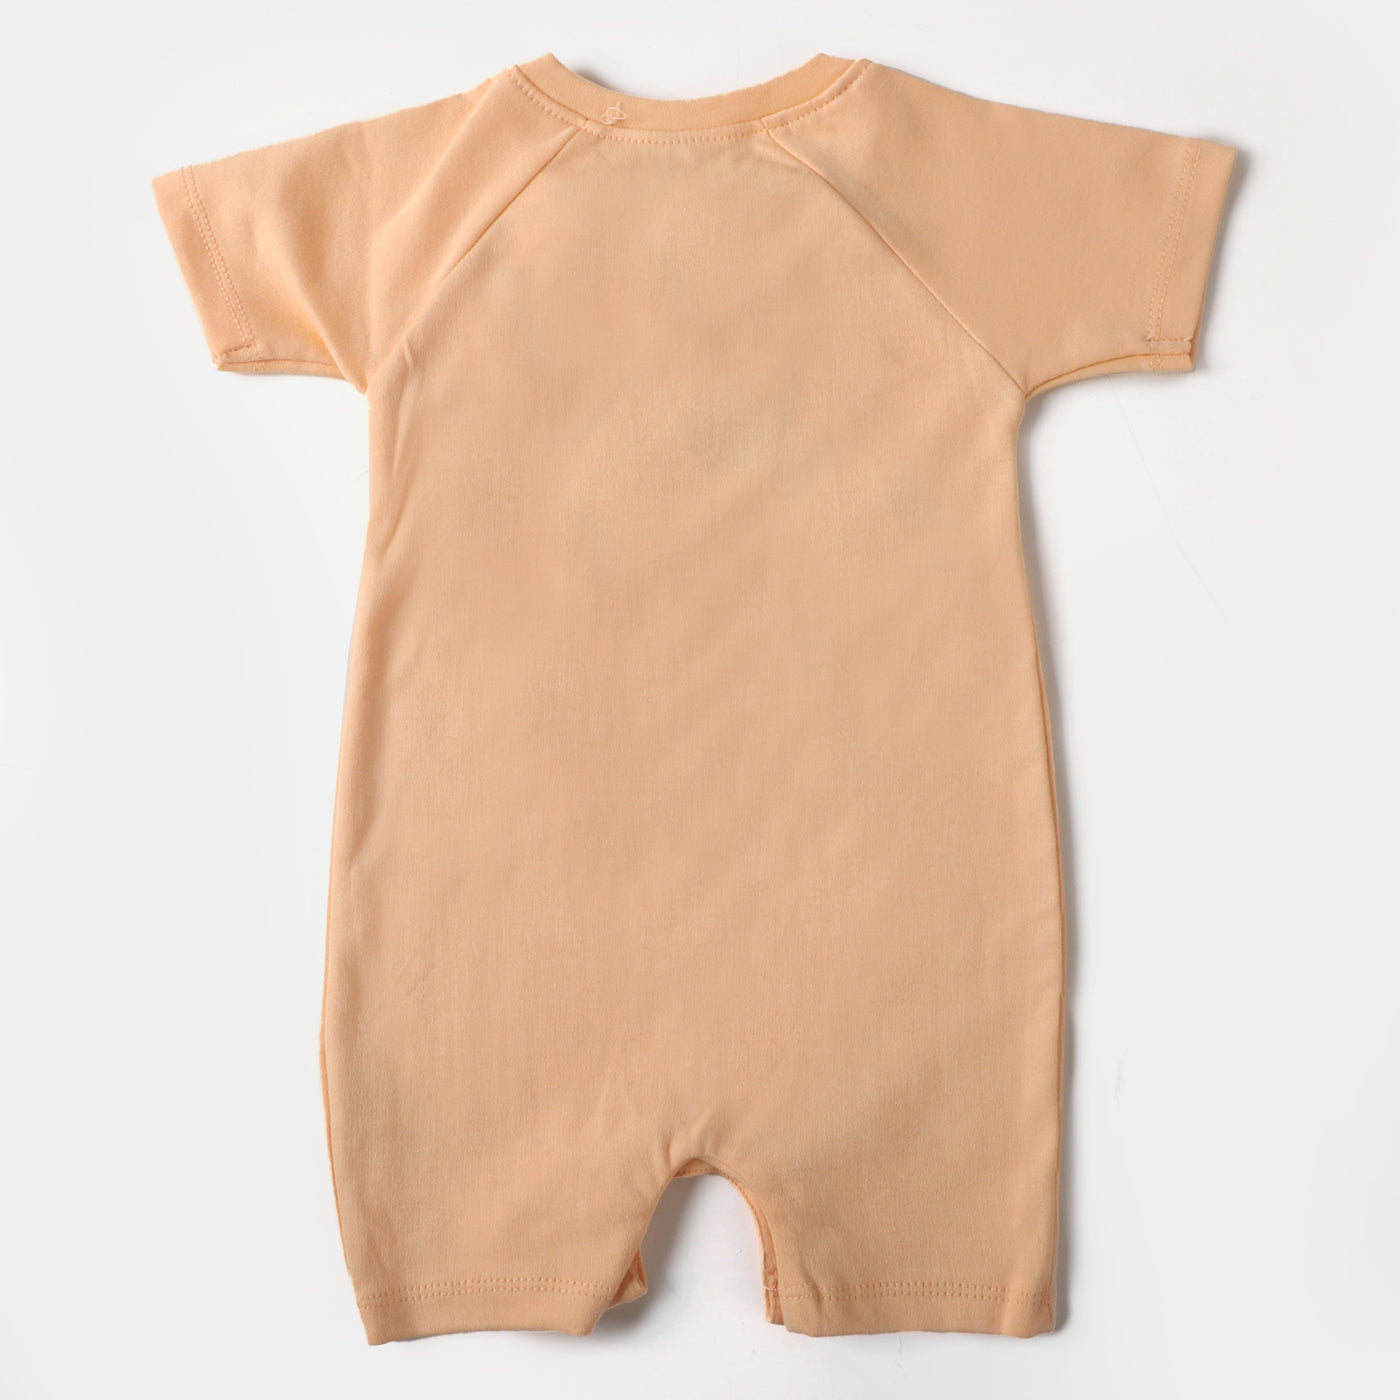 Infant Boys Knitted Romper Mummy - Cream Puff